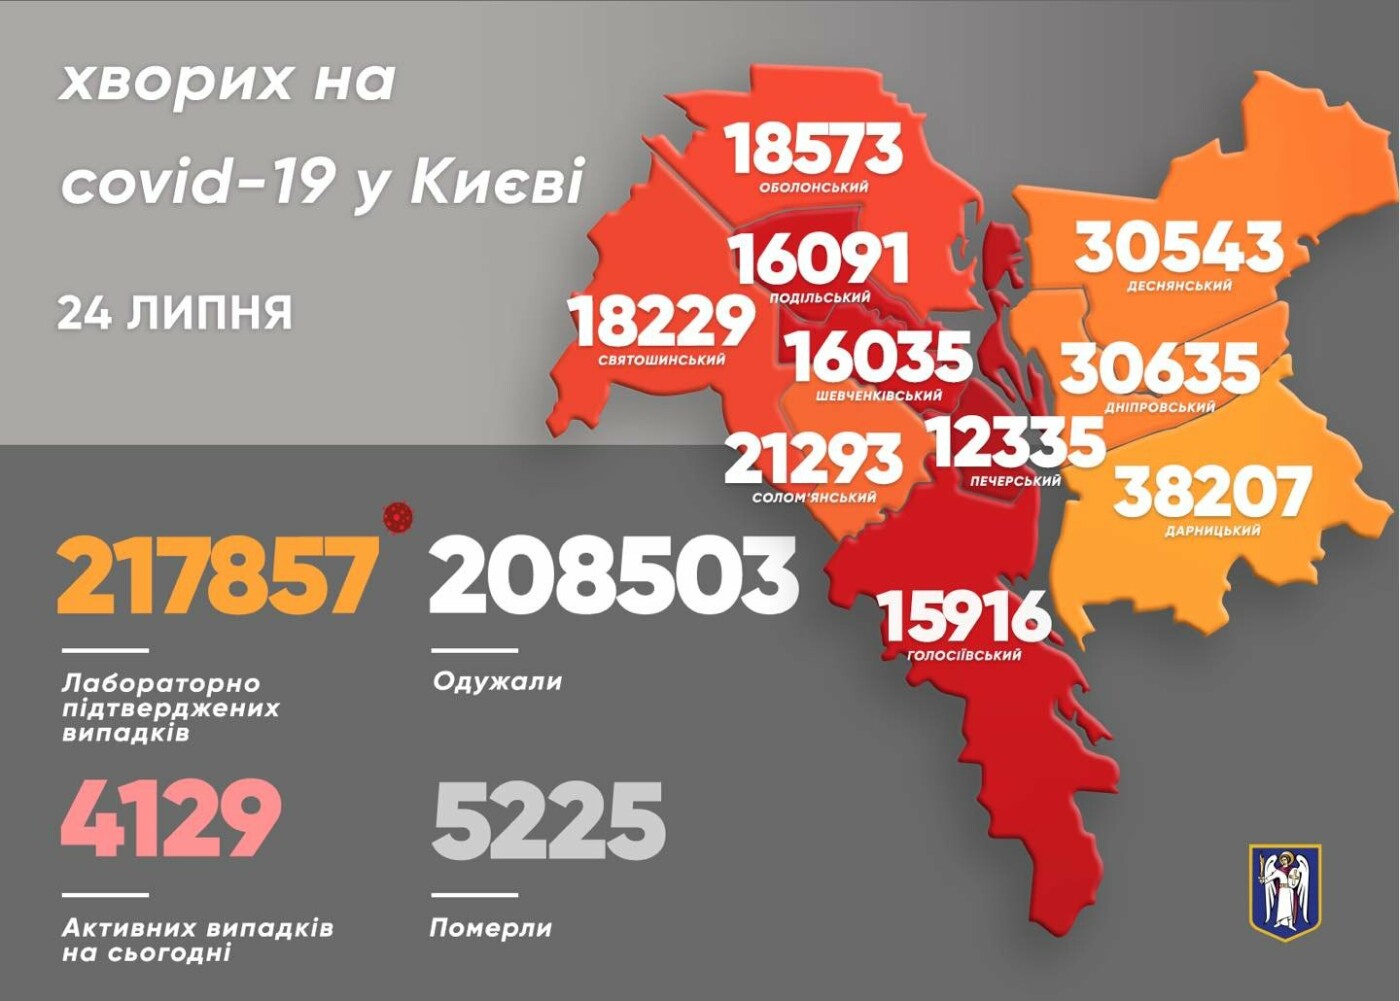 Коронавирус в Киеве: появилась статистика COVID-19 по районам за последние сутки